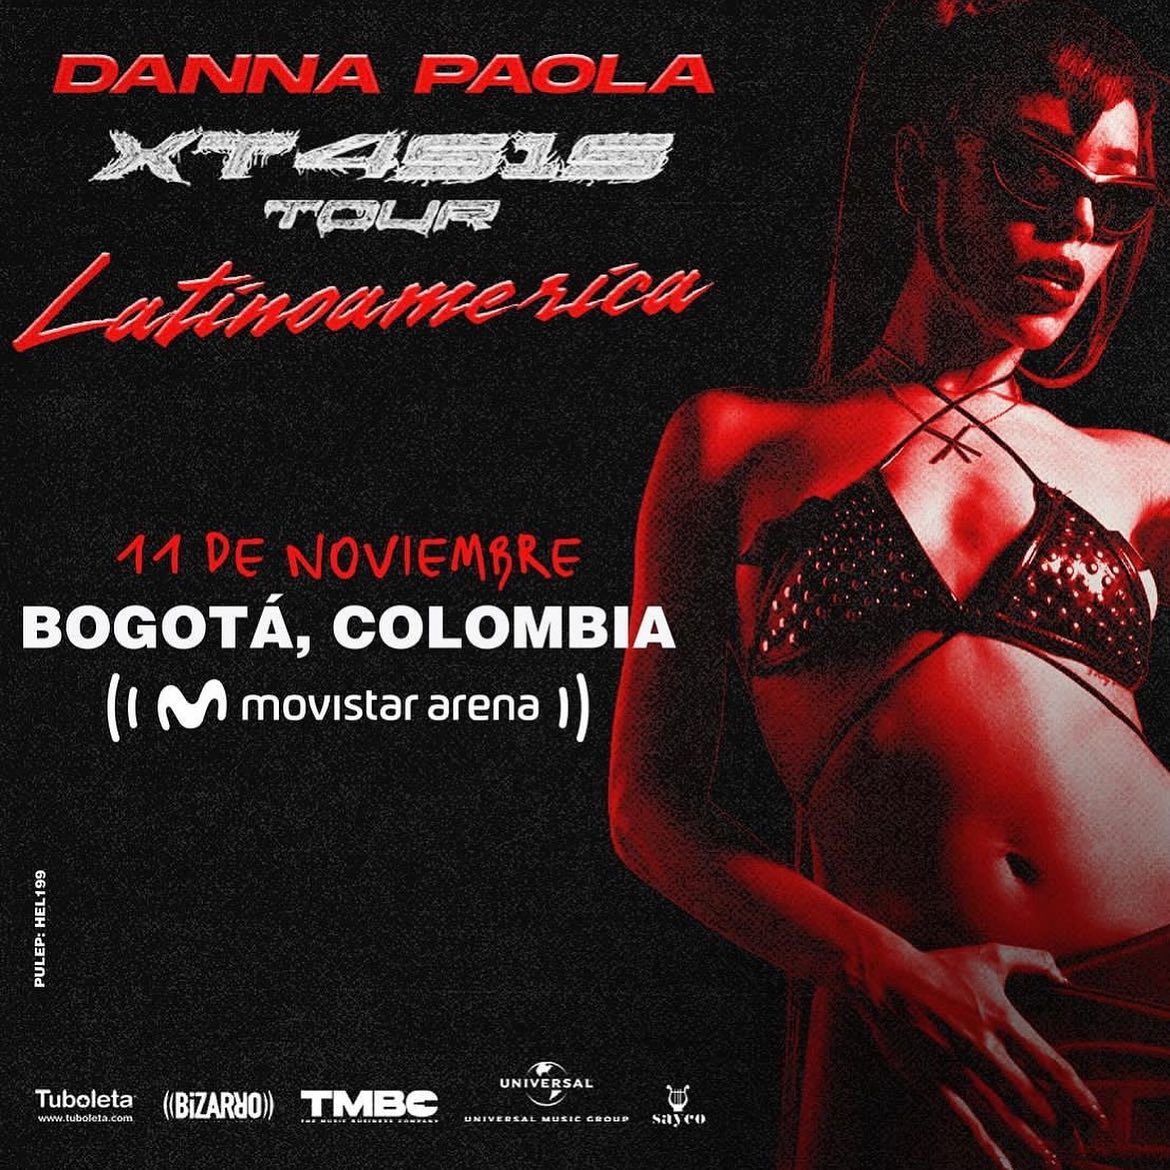 Danna Paola Tour